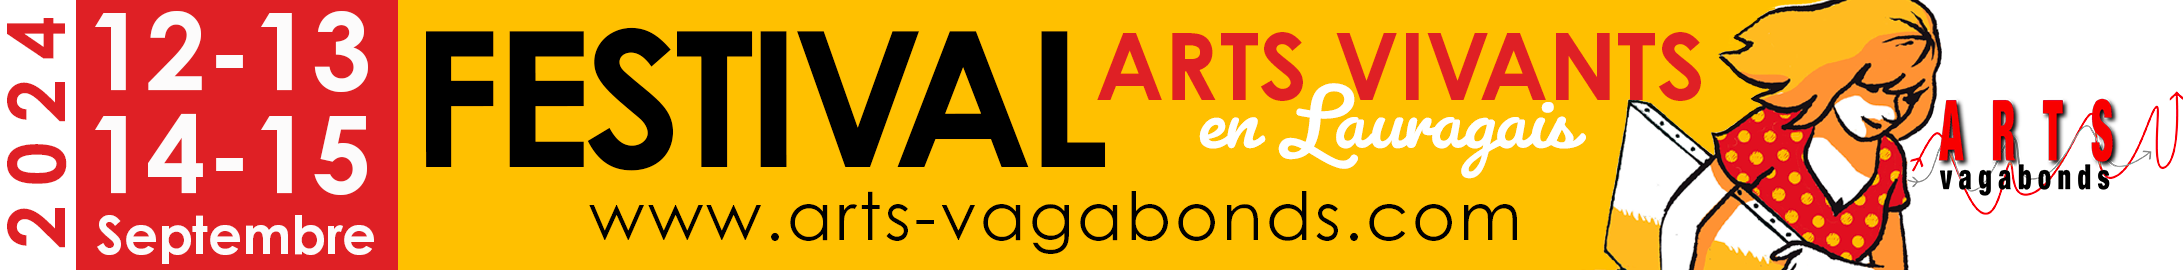 Festival Arts Vagabonds en Lauragais